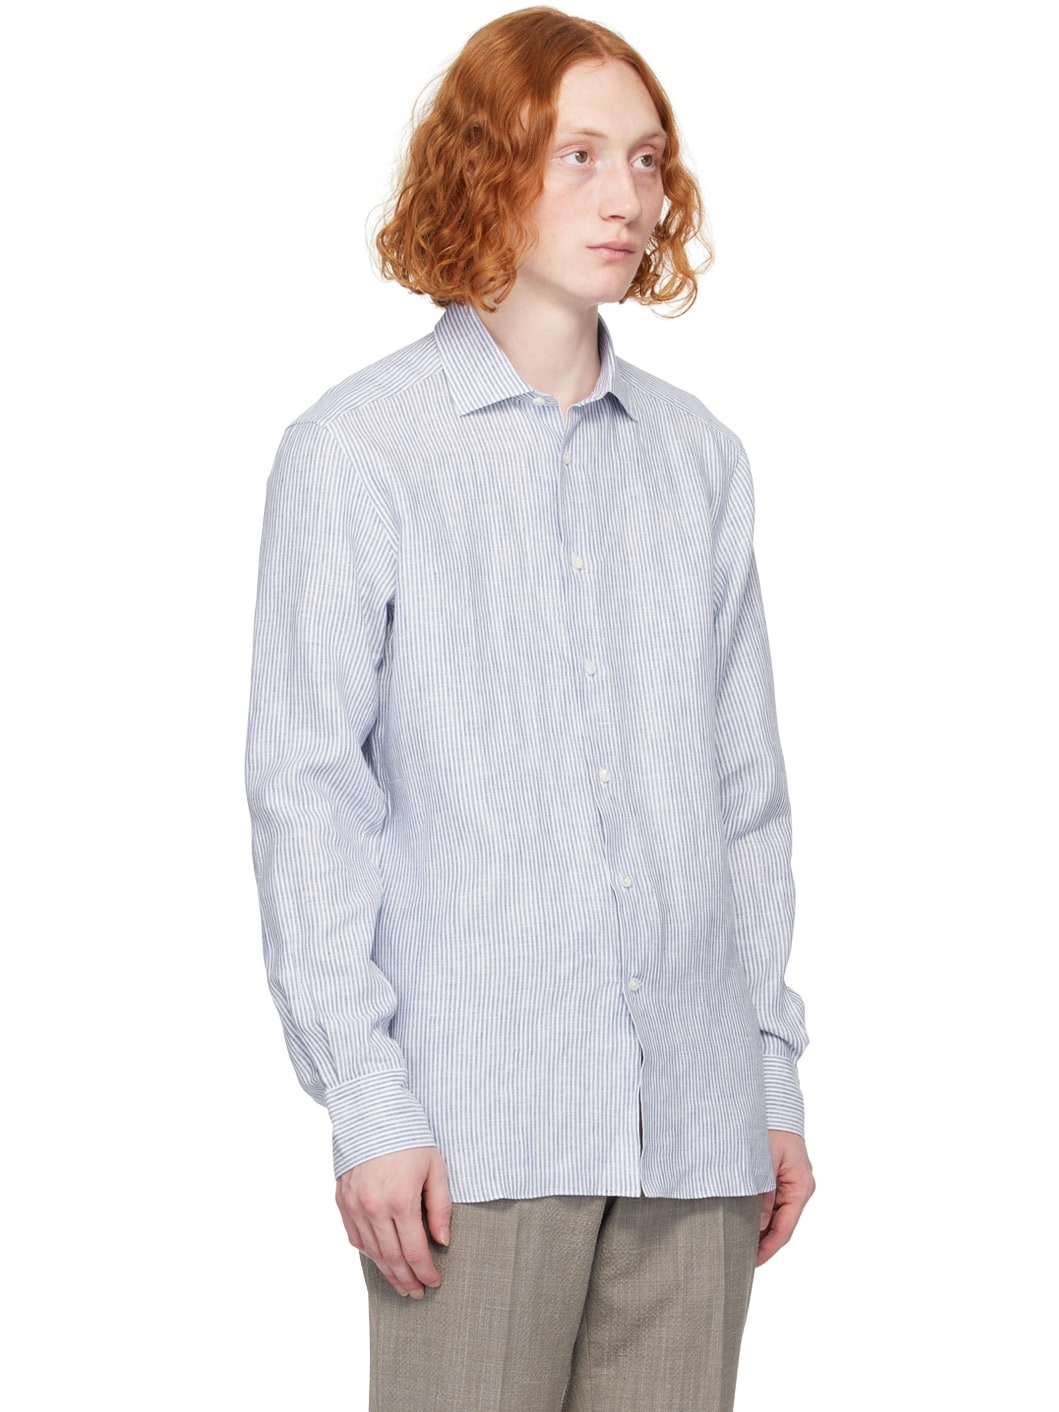 White & Blue Spread Collar Shirt - 4